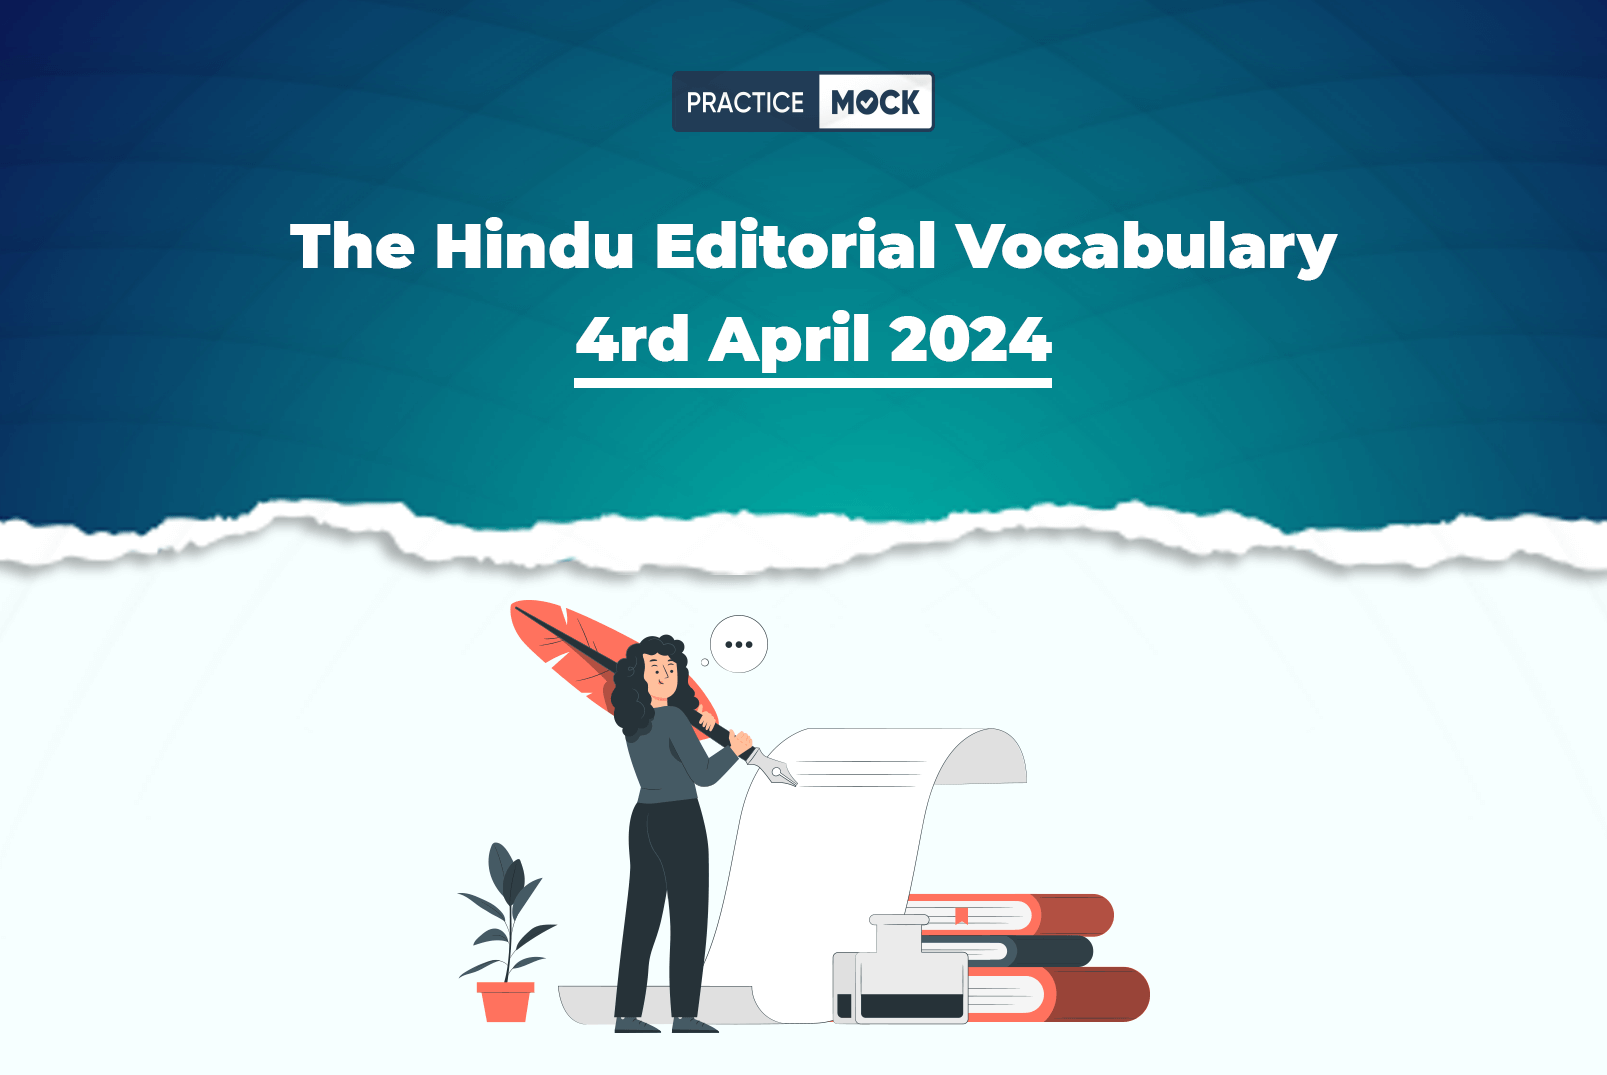 The Hindu Editorial Vocabulary 4th April 2024